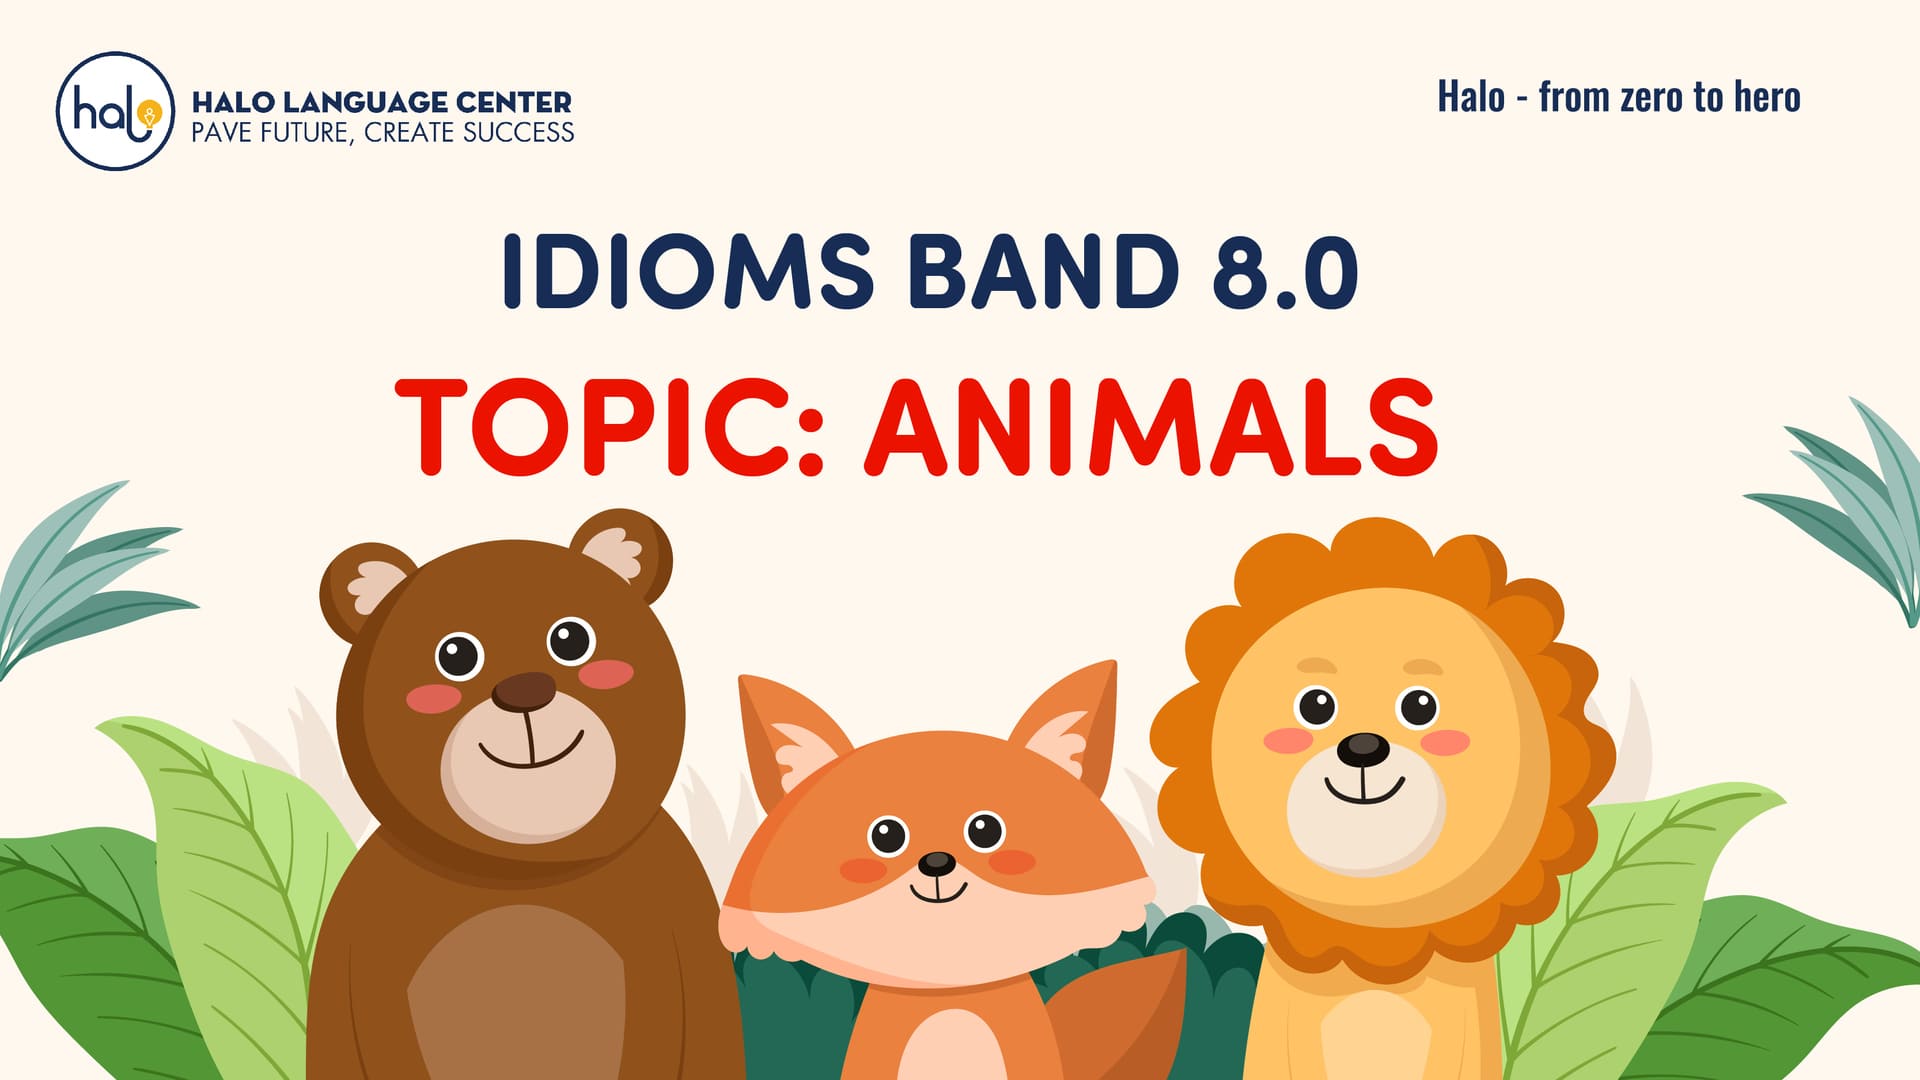 IDIOMS BAND 8.0 - TOPIC ANIMALS